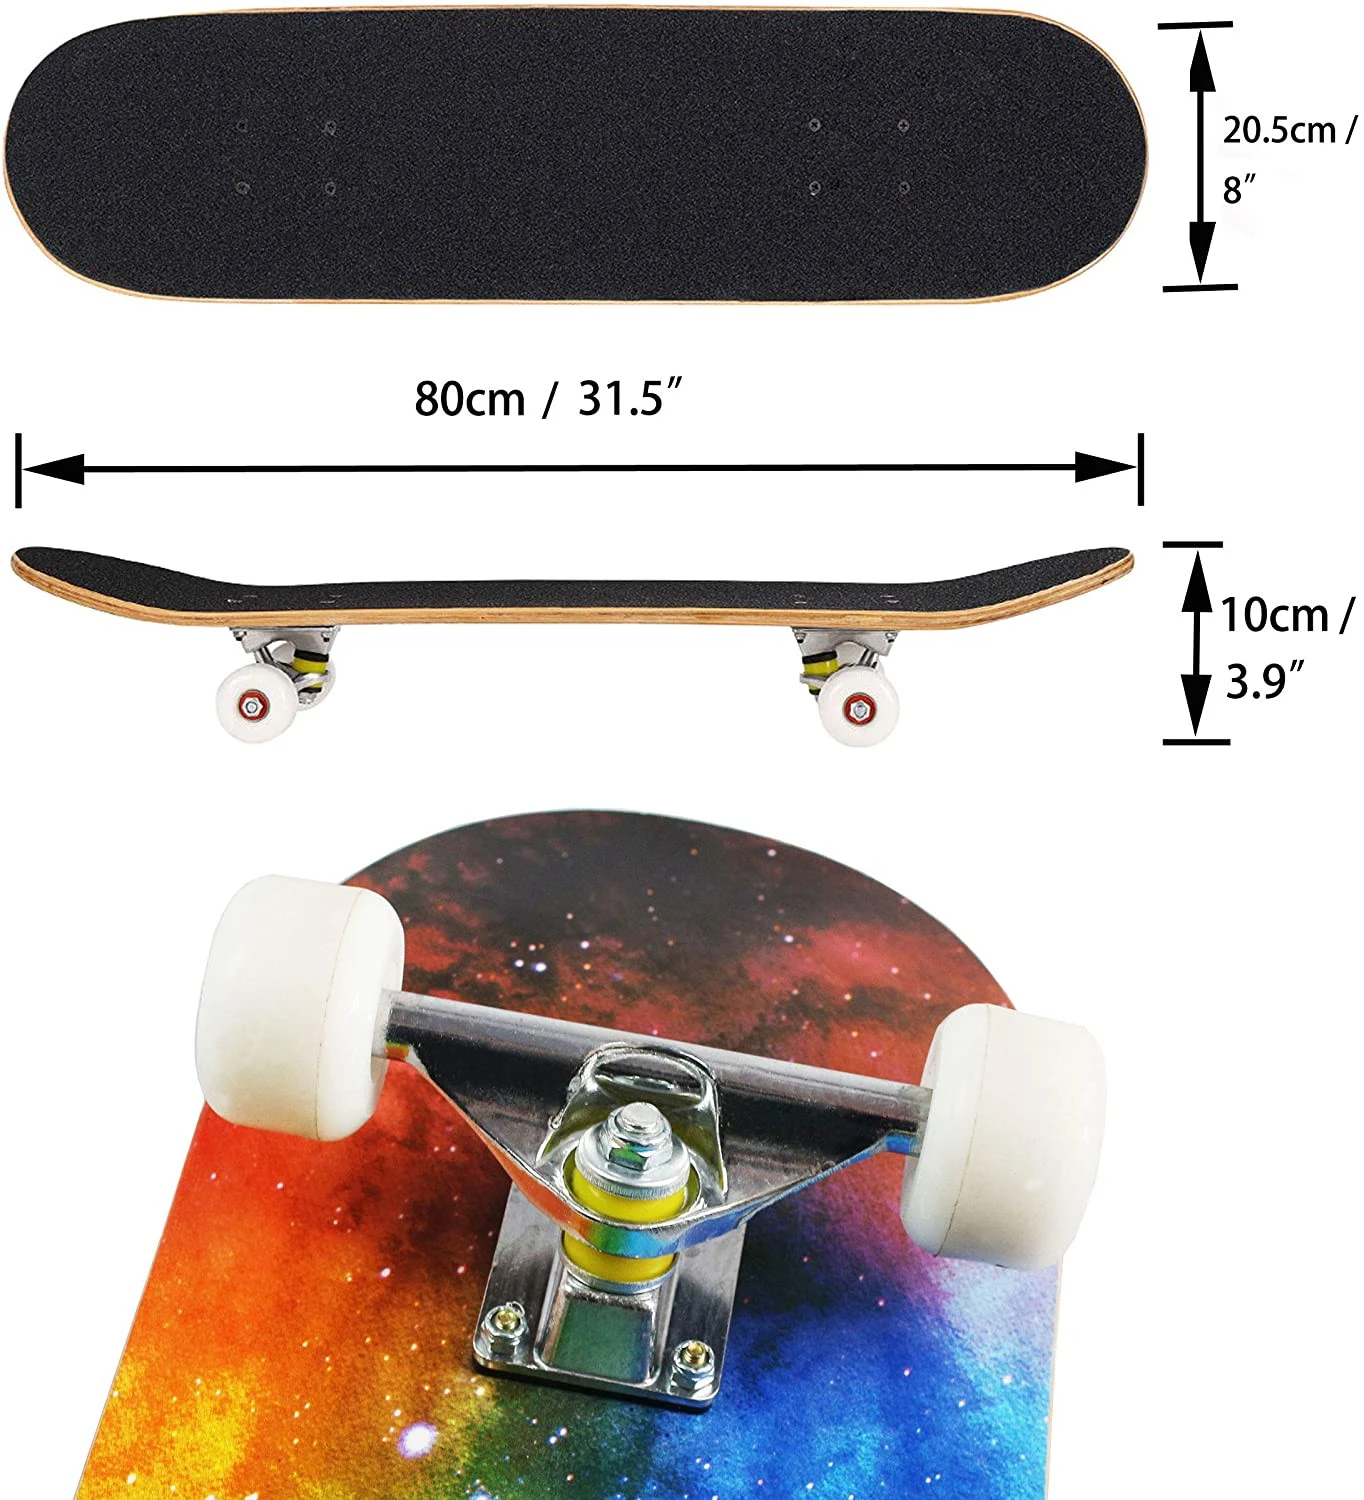 Bunnyhi HB003 skate board decks wholesale 7 ply wood skateboard